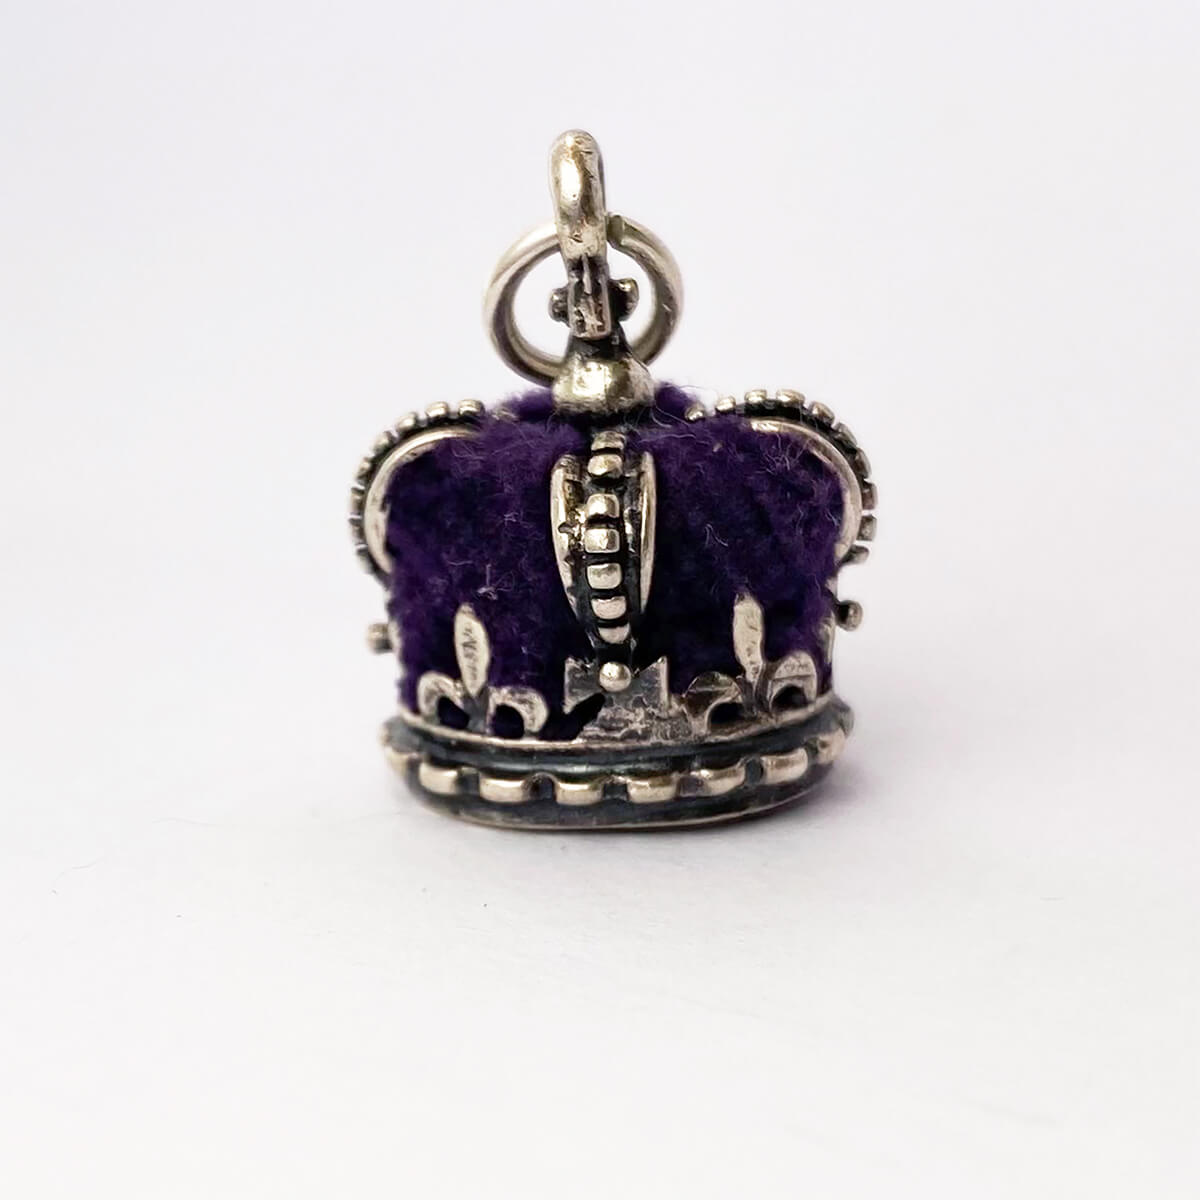 Vintage Beaucraft crown charm pendant with purple velvet